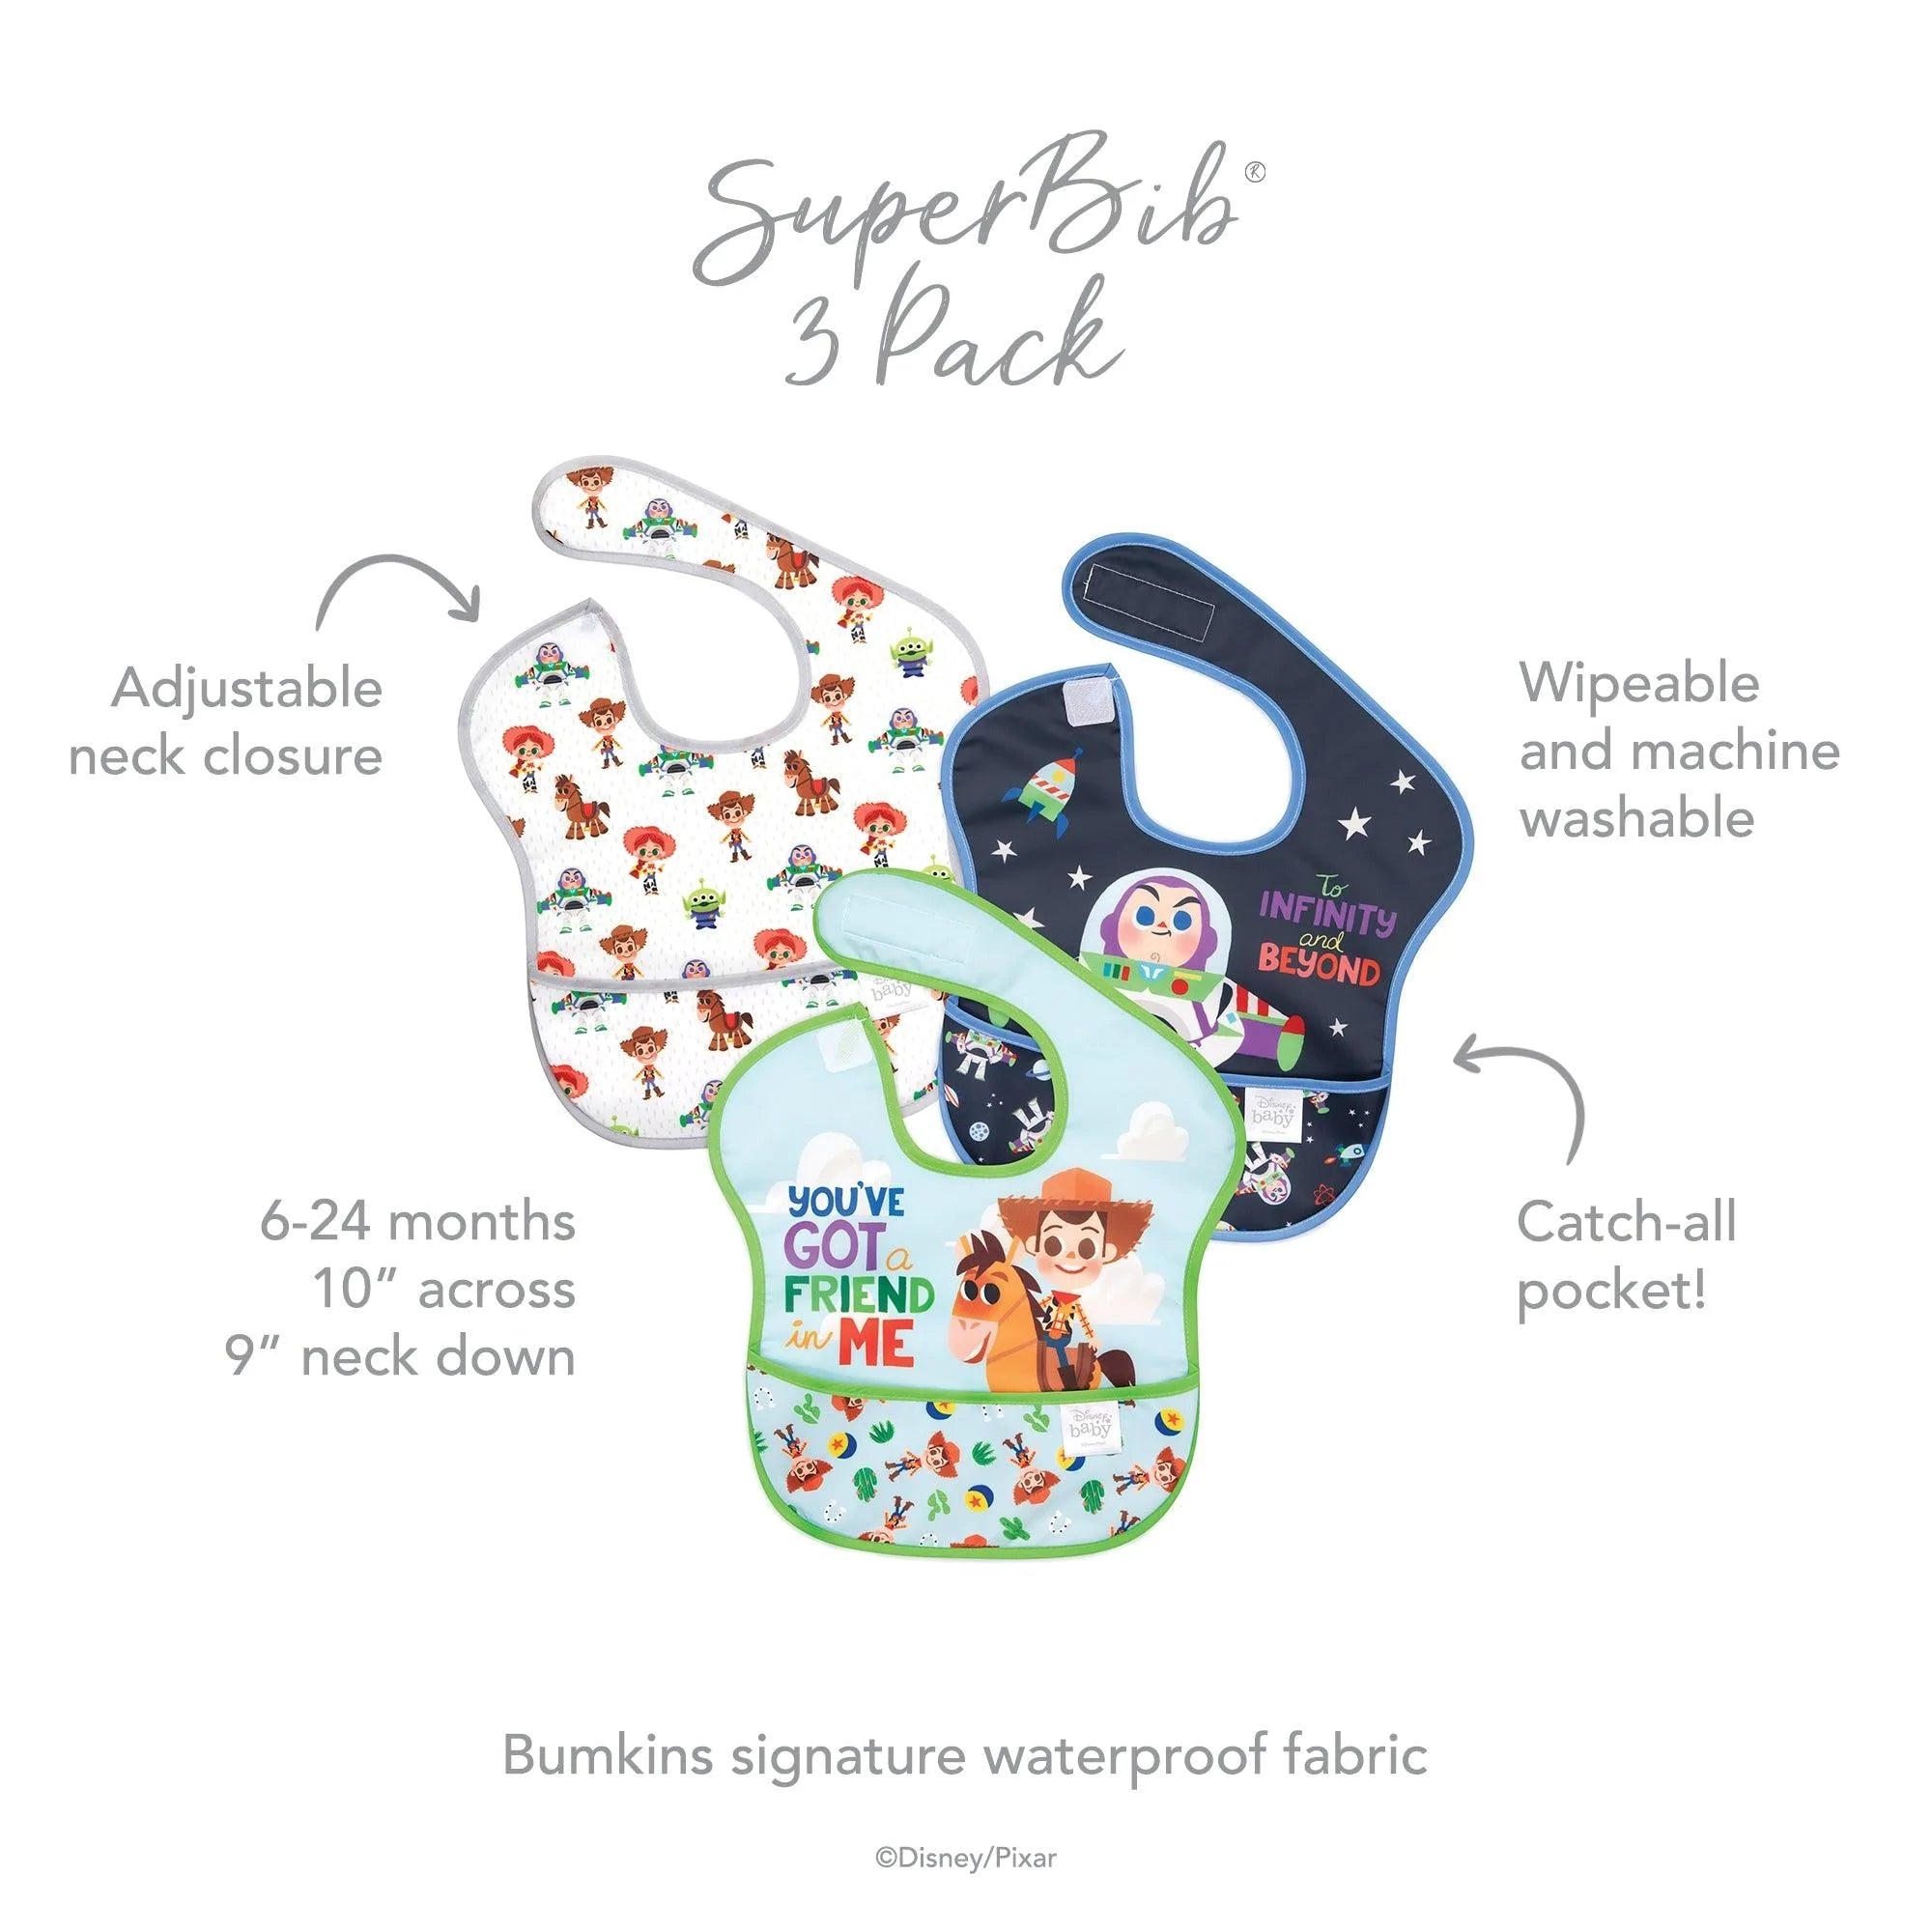 SuperBib® 3 Pack: Toy Story - Bumkins